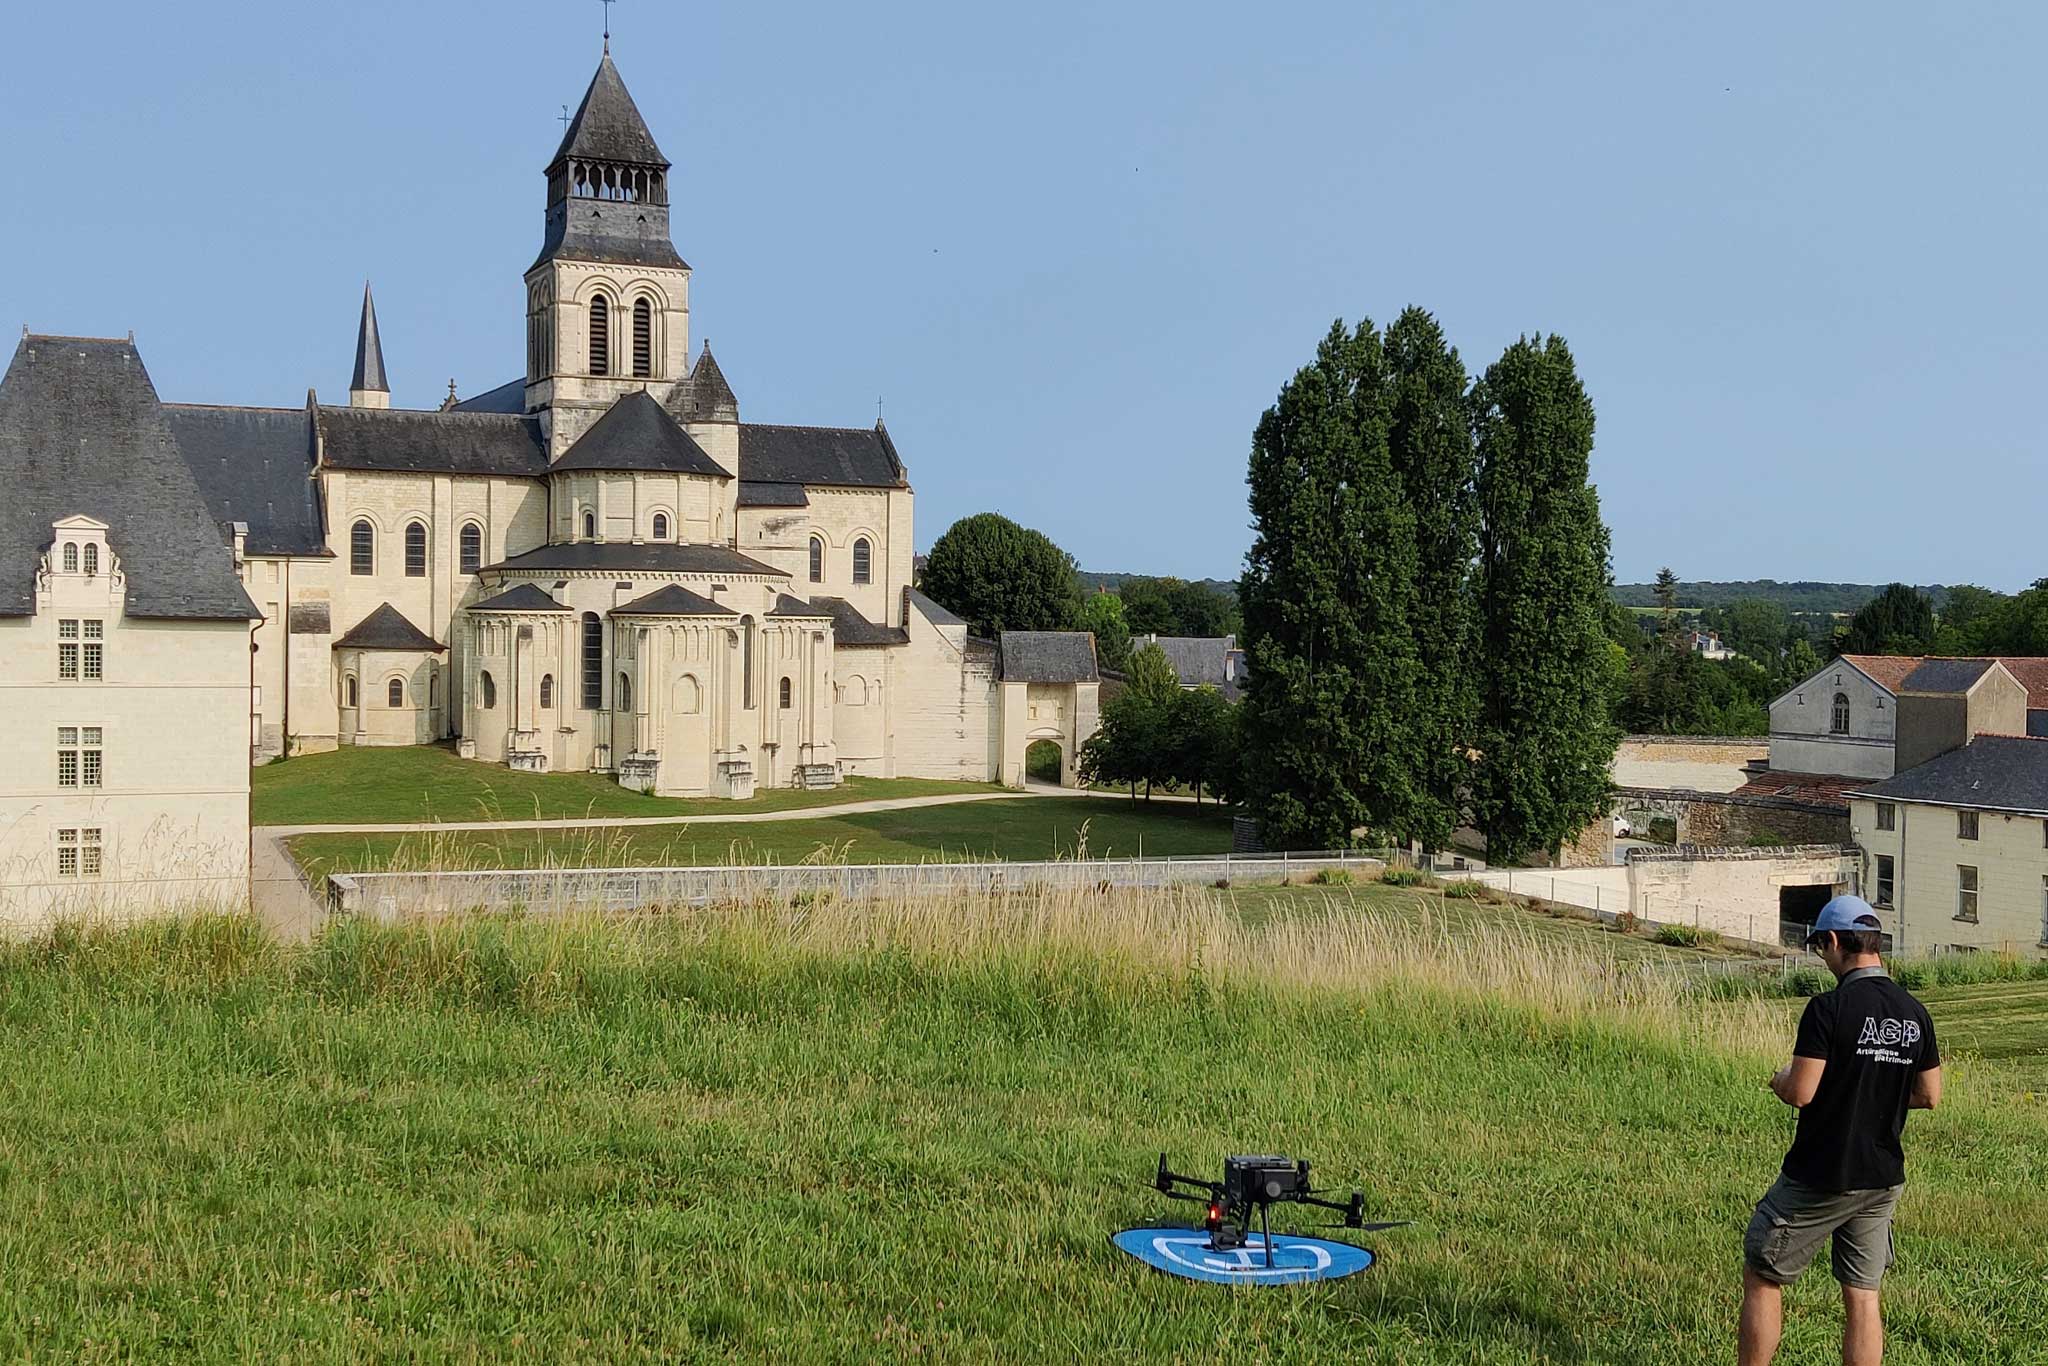 3D Scanning of Fontevraud Abbey for Heritage Preservation